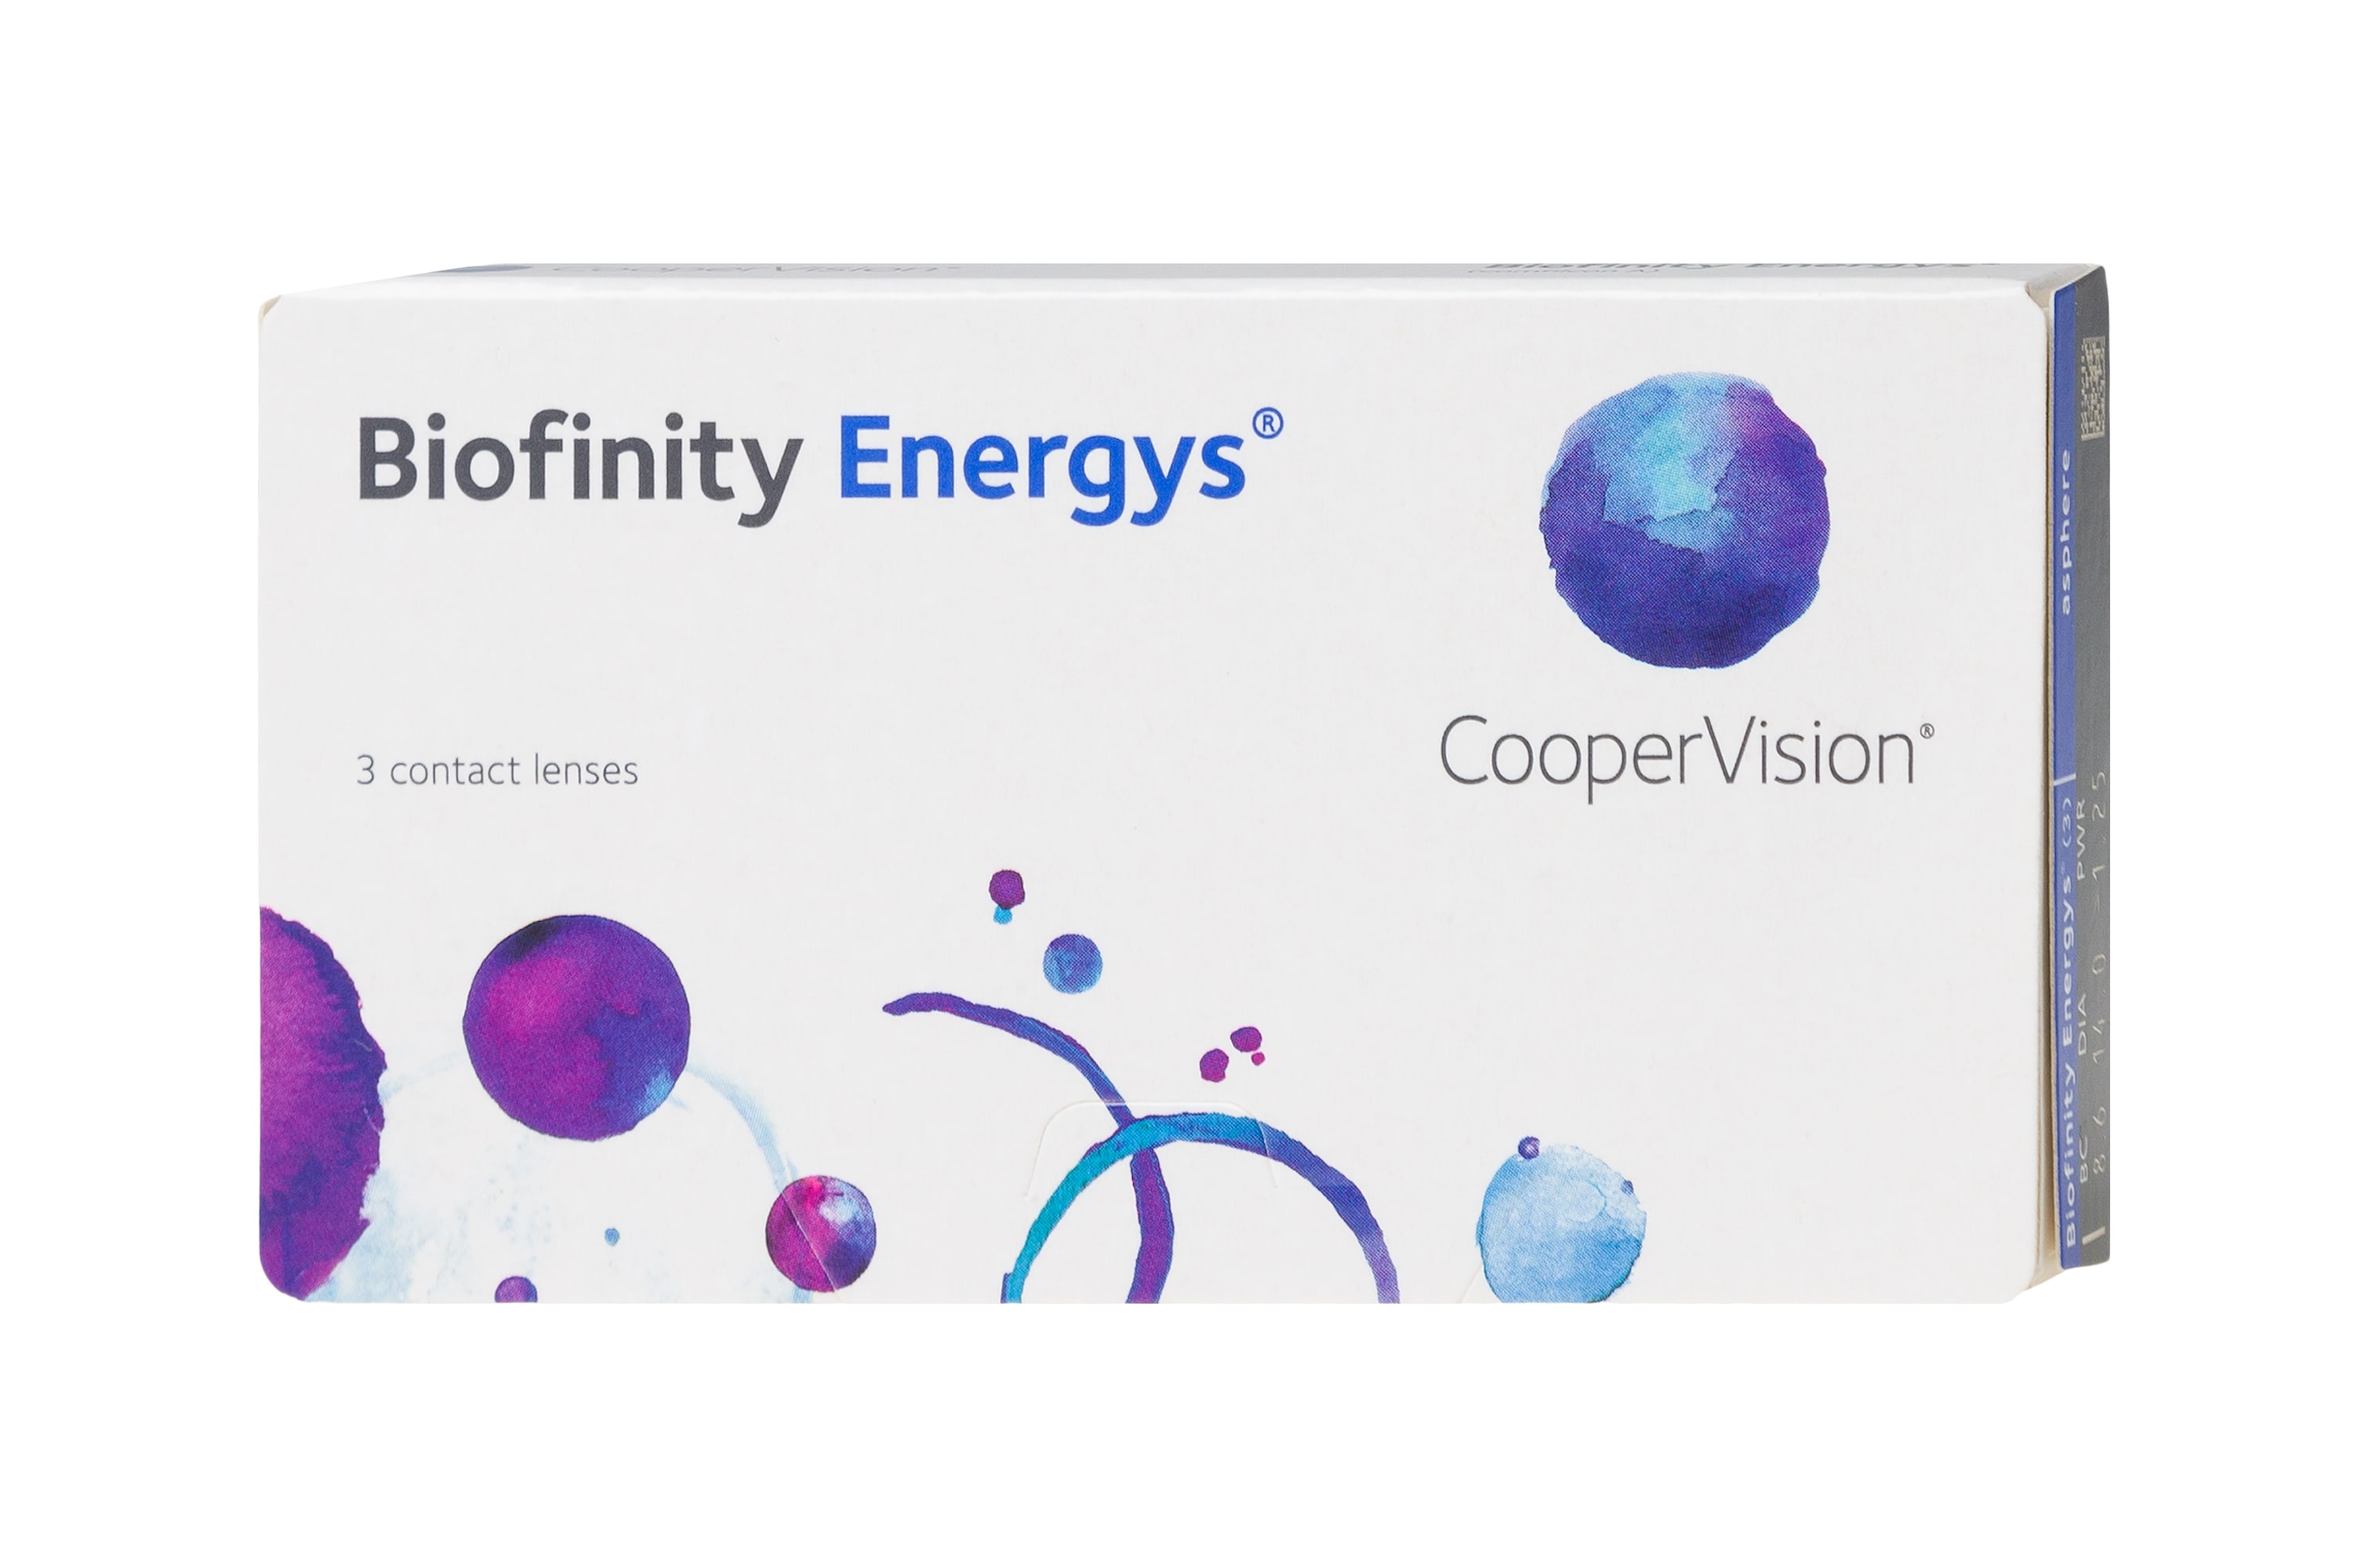 biofinity-biofinity-energys-monthly-disposable-mister-spex